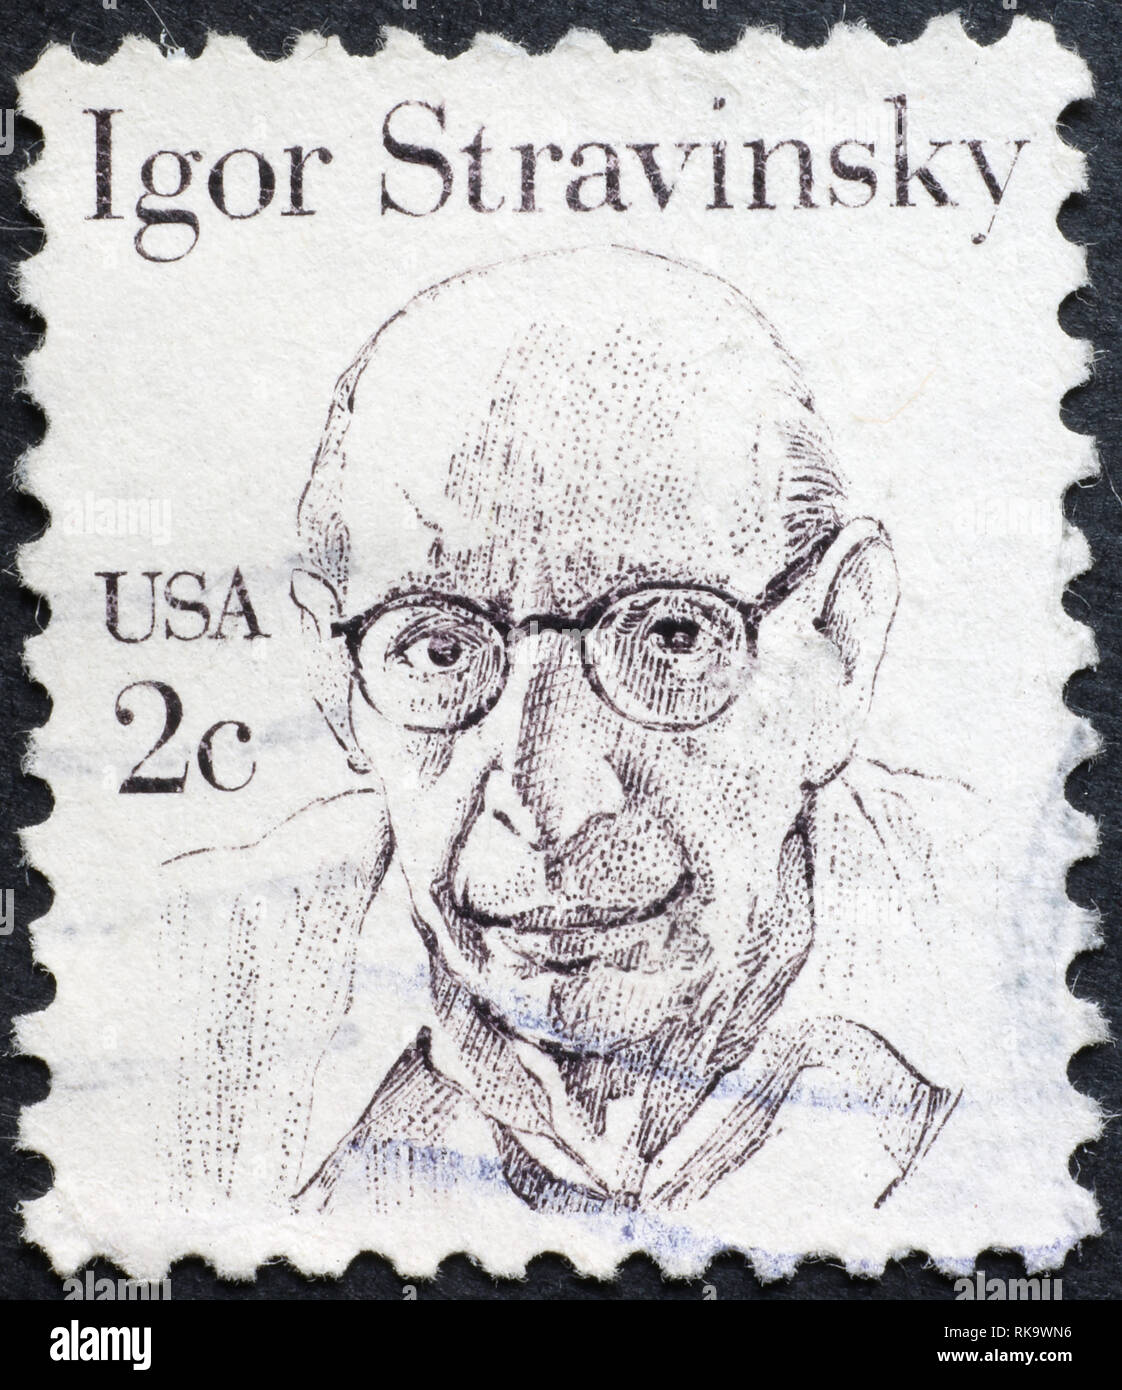 Igor Stravinsky en sello americano Foto de stock